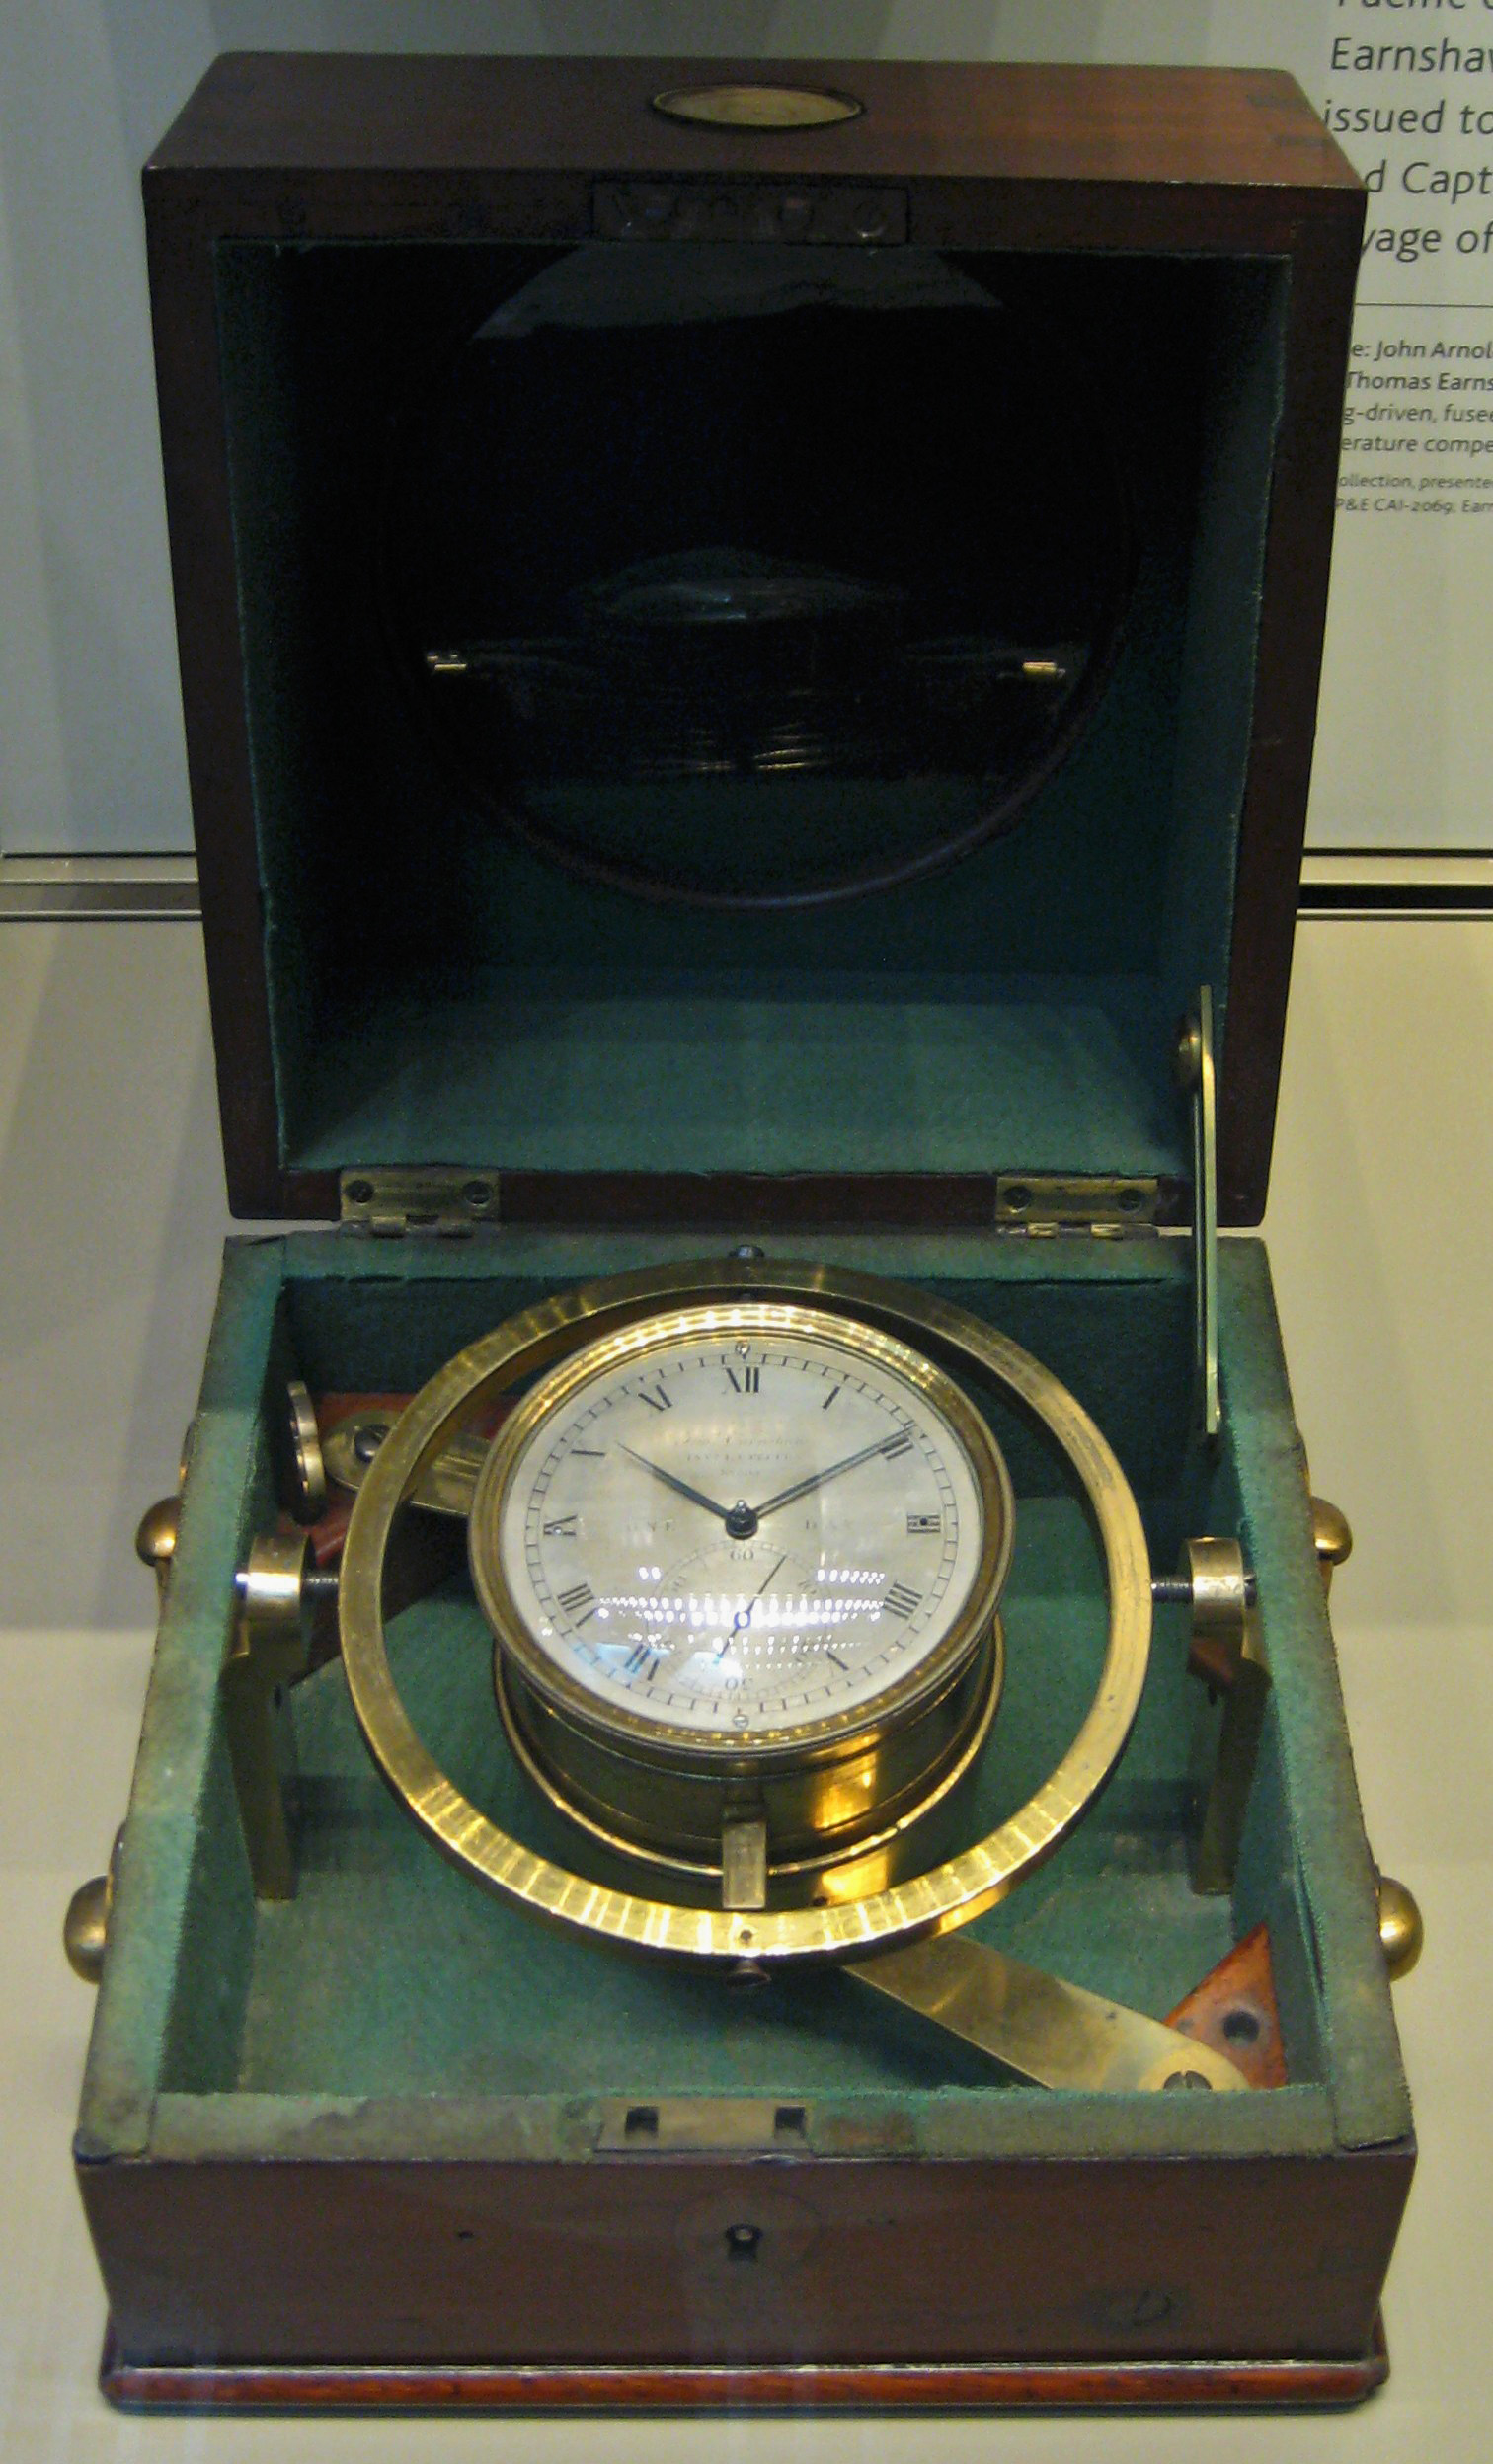 Reloj horizontal - Wikipedia, la enciclopedia libre